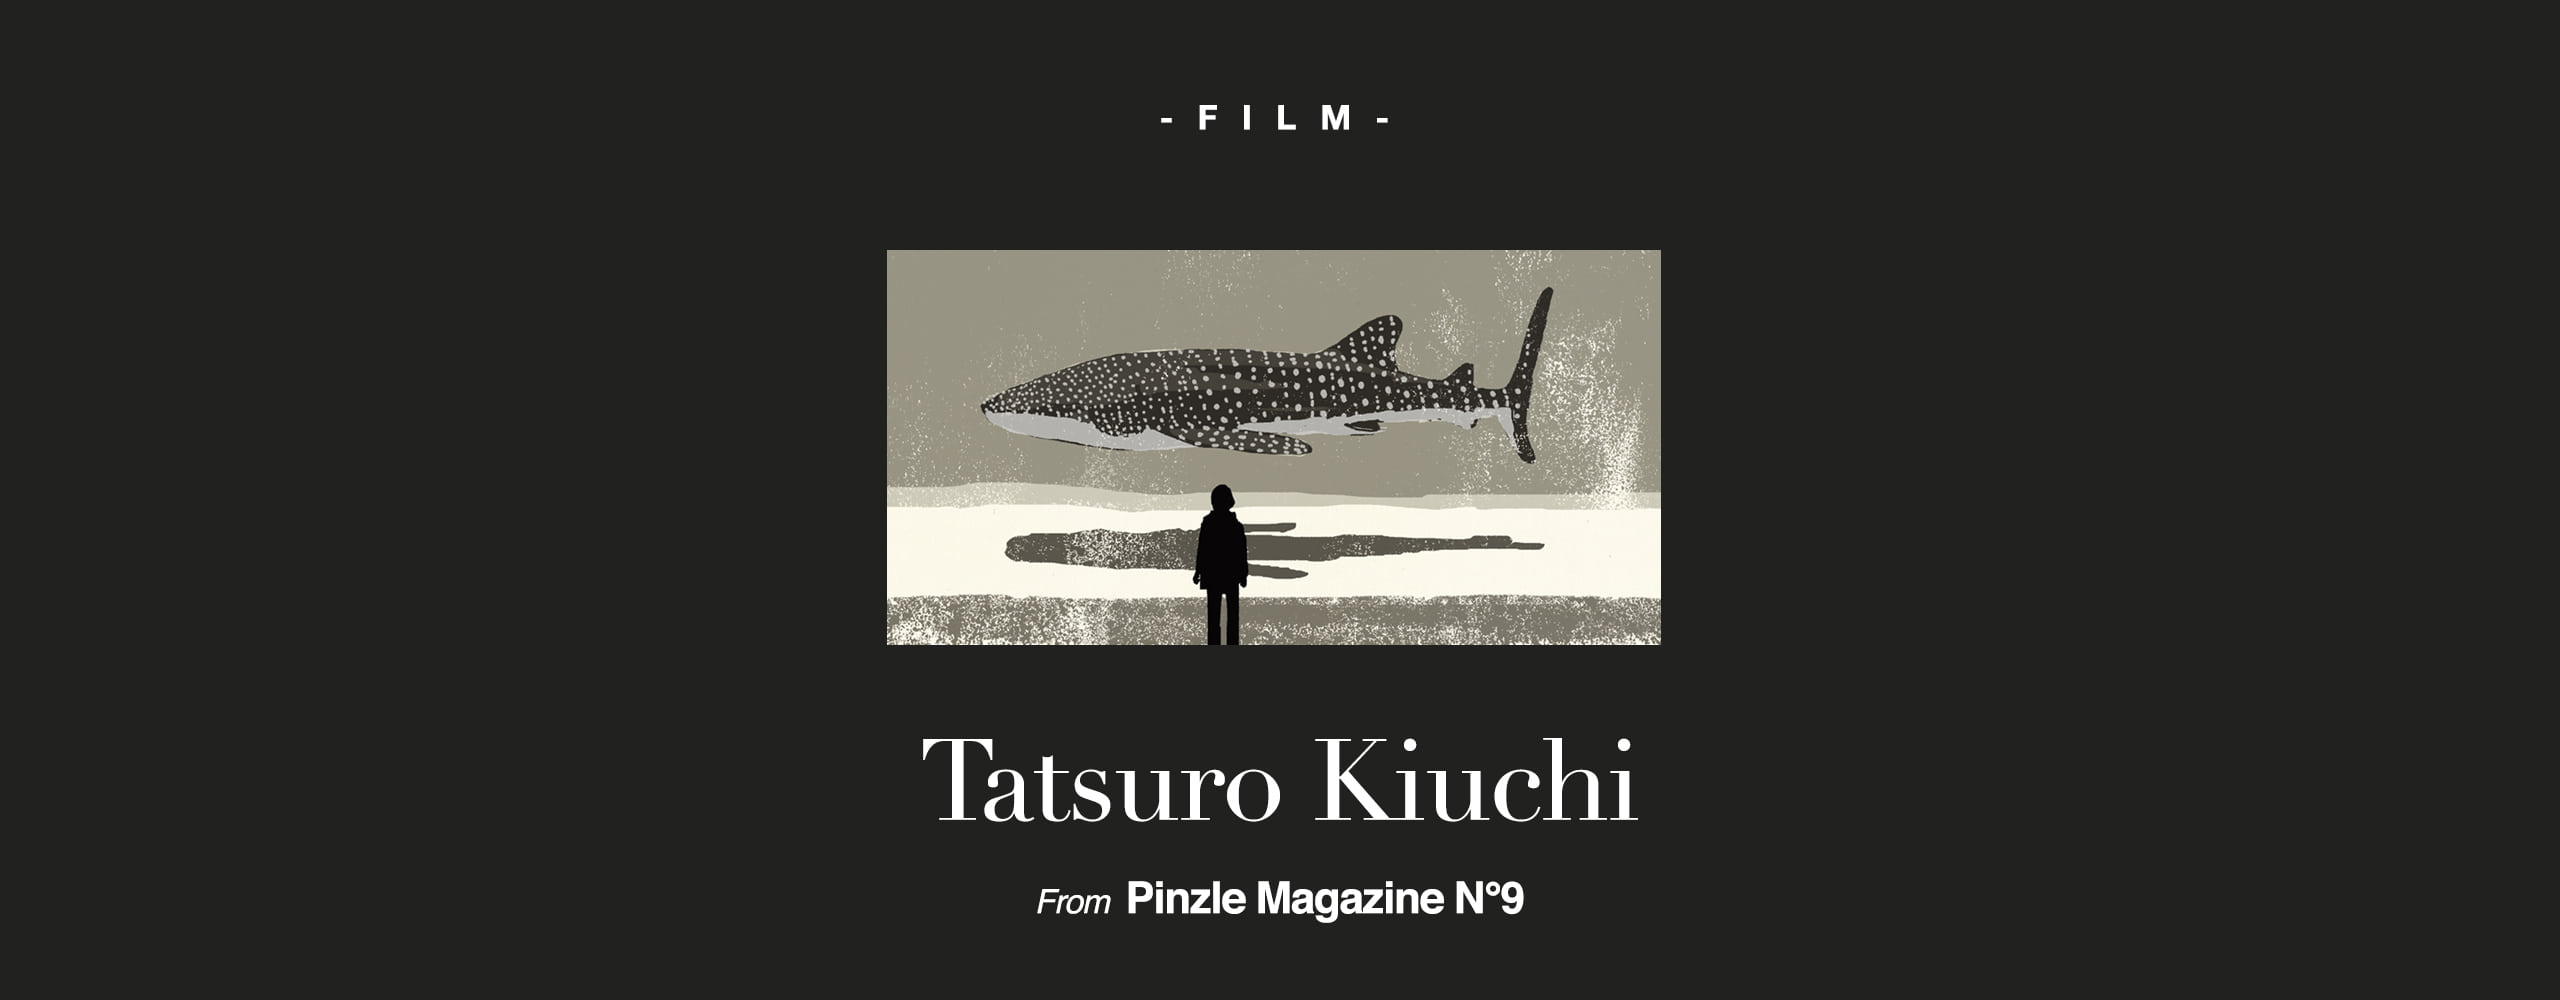 [FILM] Tatsuro Kiuchi